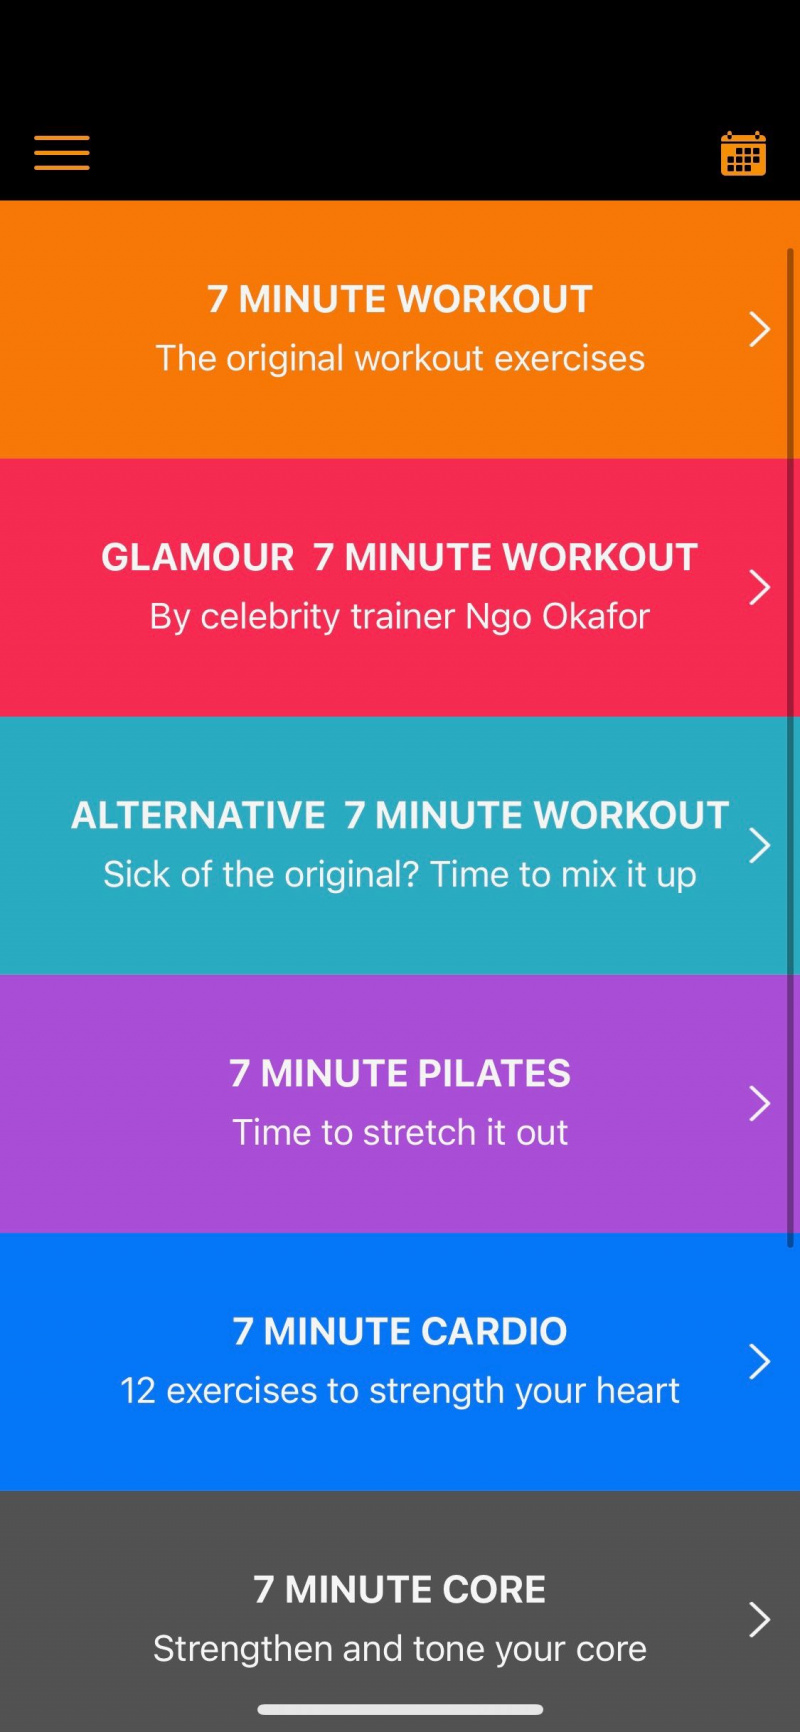   Tangkapan layar aplikasi Latihan 7 Menit yang menunjukkan jenis latihan